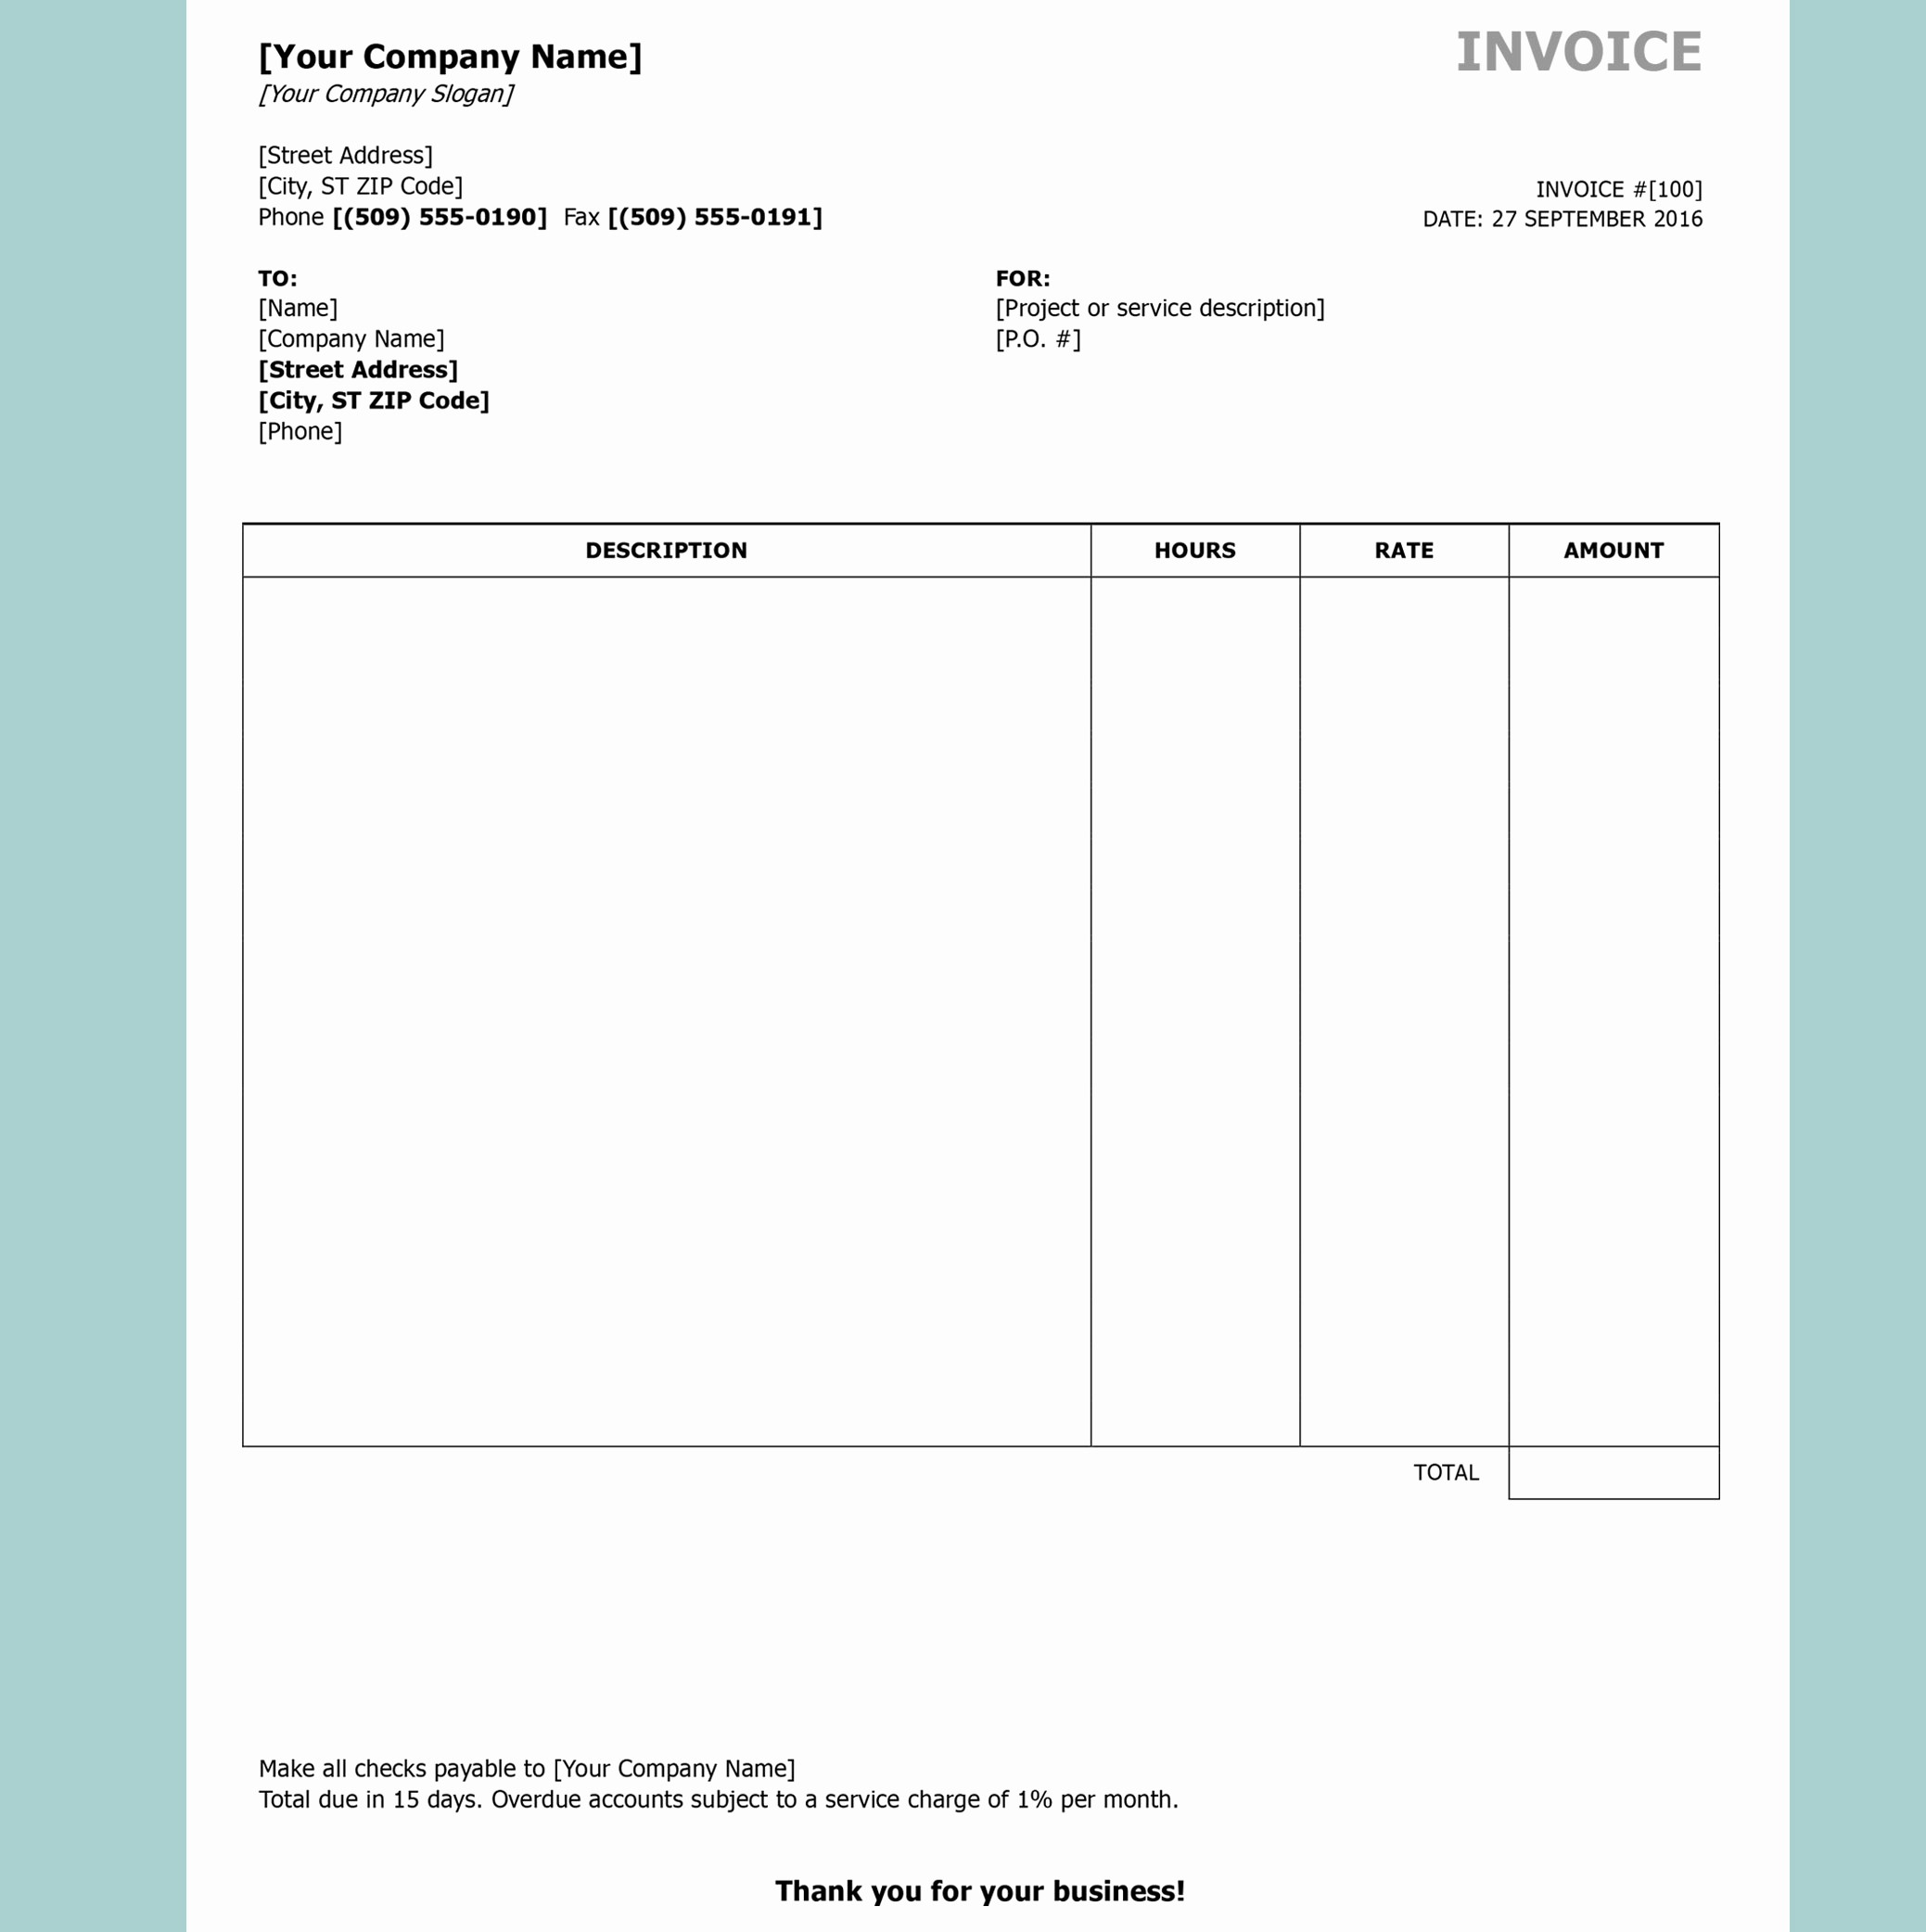 Invoice Template Excel Download Free Elegant Free Invoice Templates by Invoiceberry the Grid System